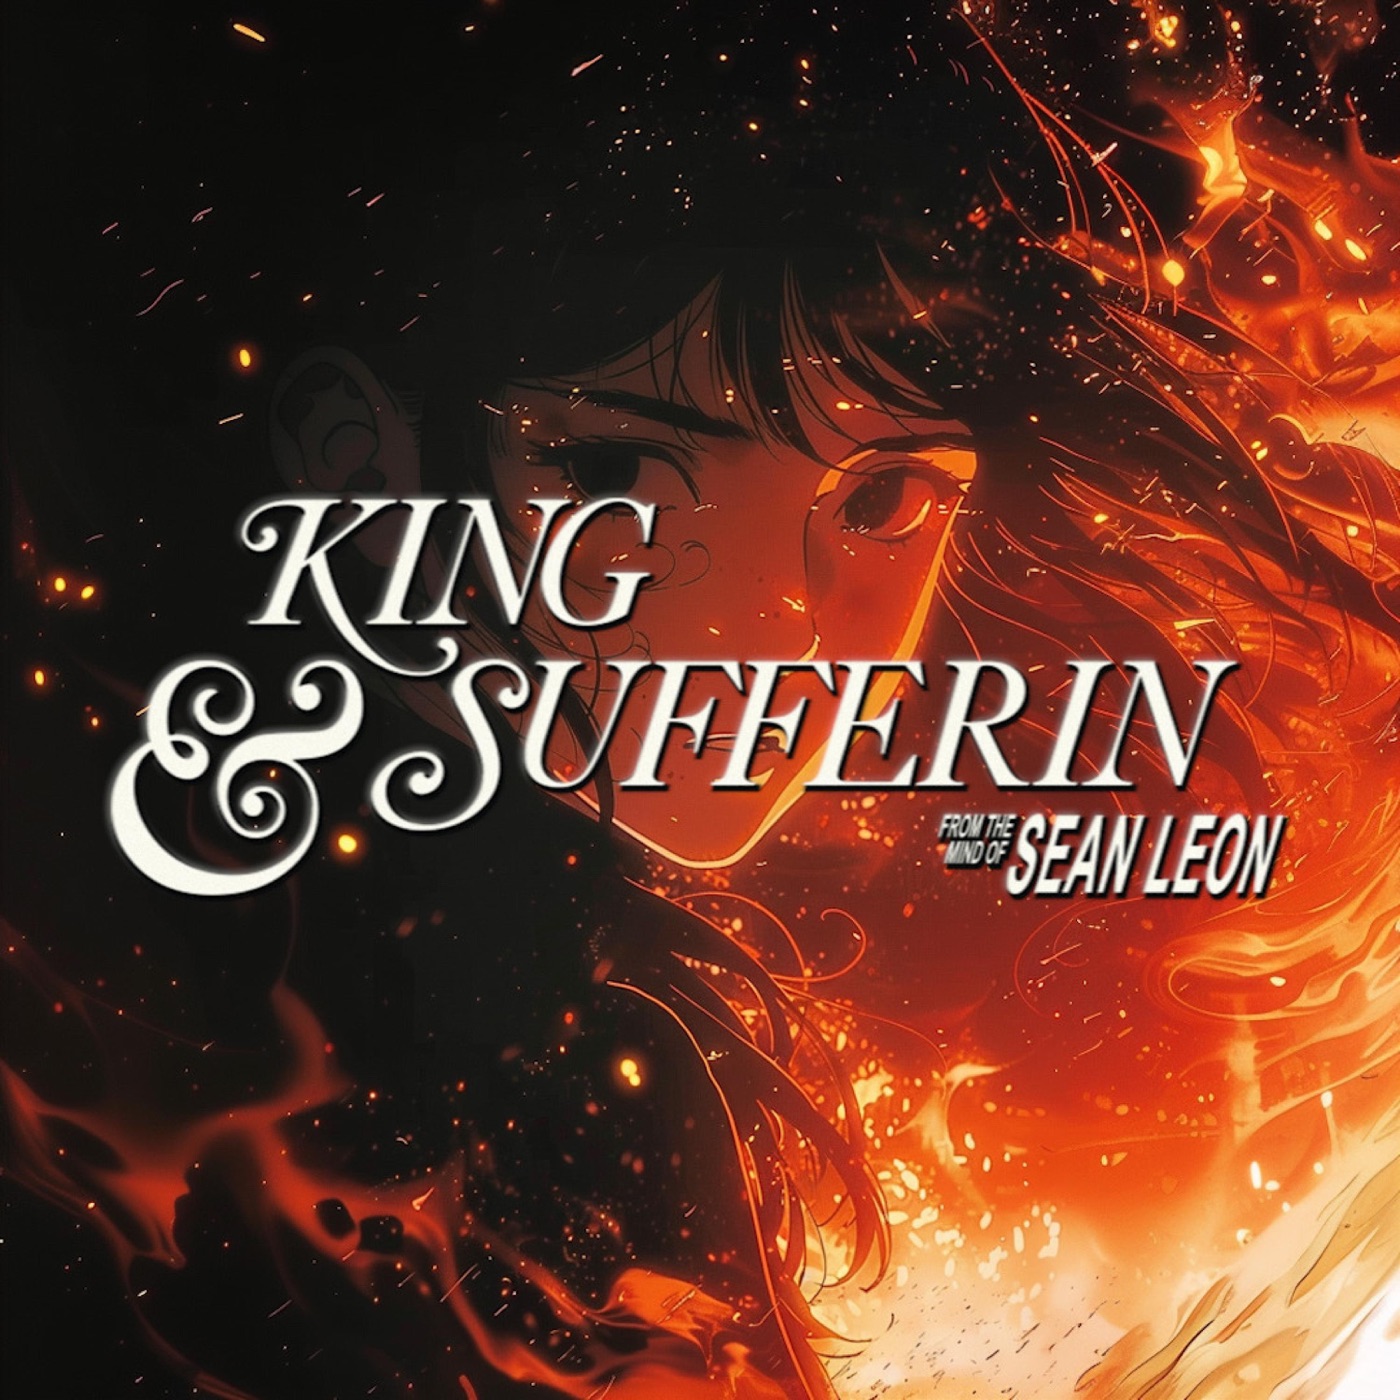 King & Sufferin (Opening Theme) by Sean Leon